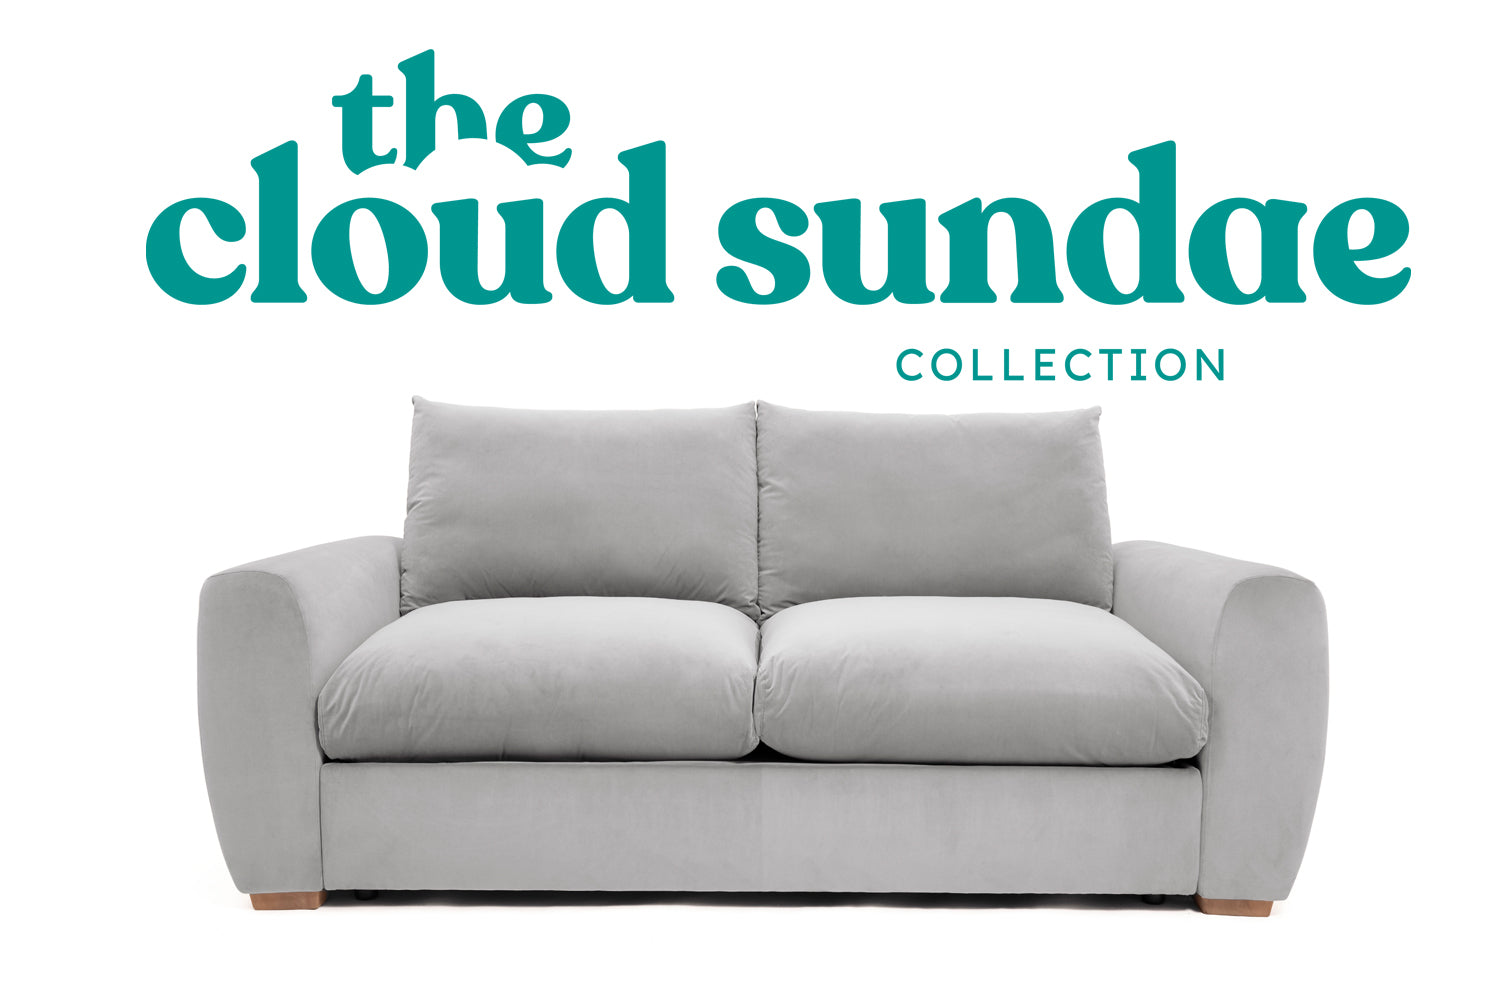 Snug Cloud Sundae Swatch Request - The Cloud Sundae 2 seater in Soft Grey Velvet